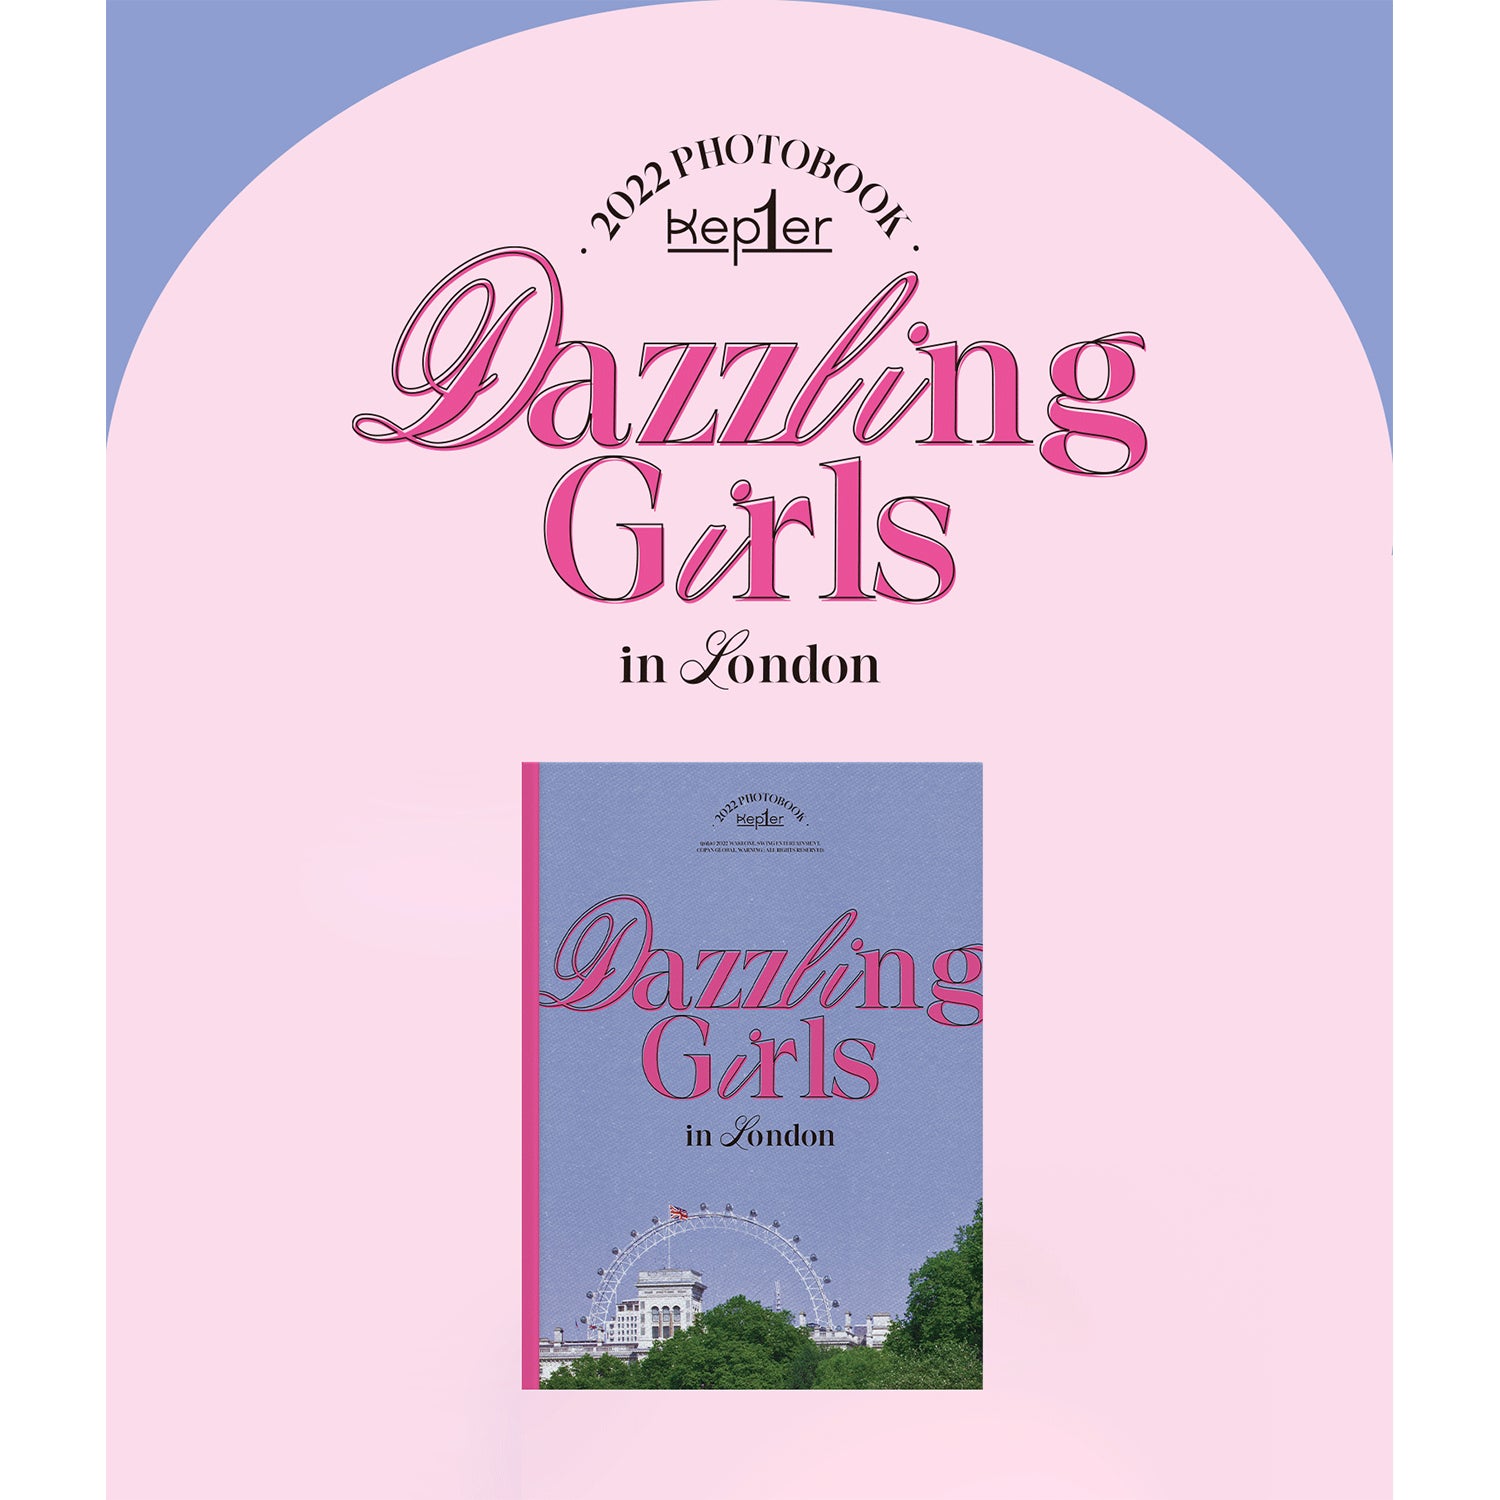 KEP1ER 2022 PHOTOBOOK 'DAZZLING GIRLS IN LONDON' COVER